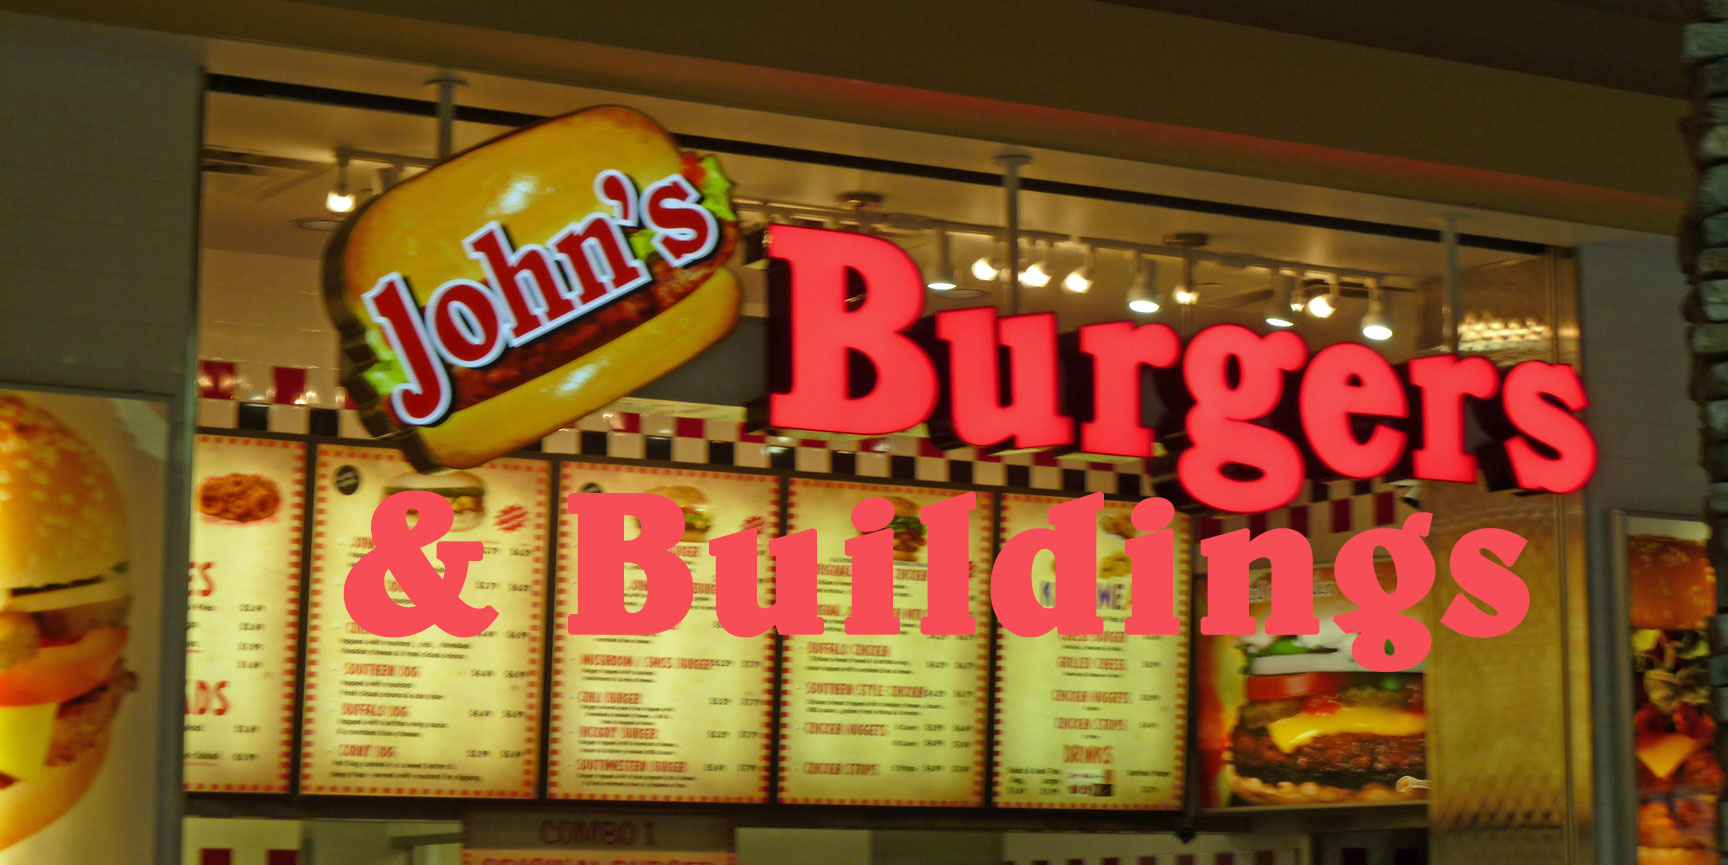 John's Burgers and Buildings